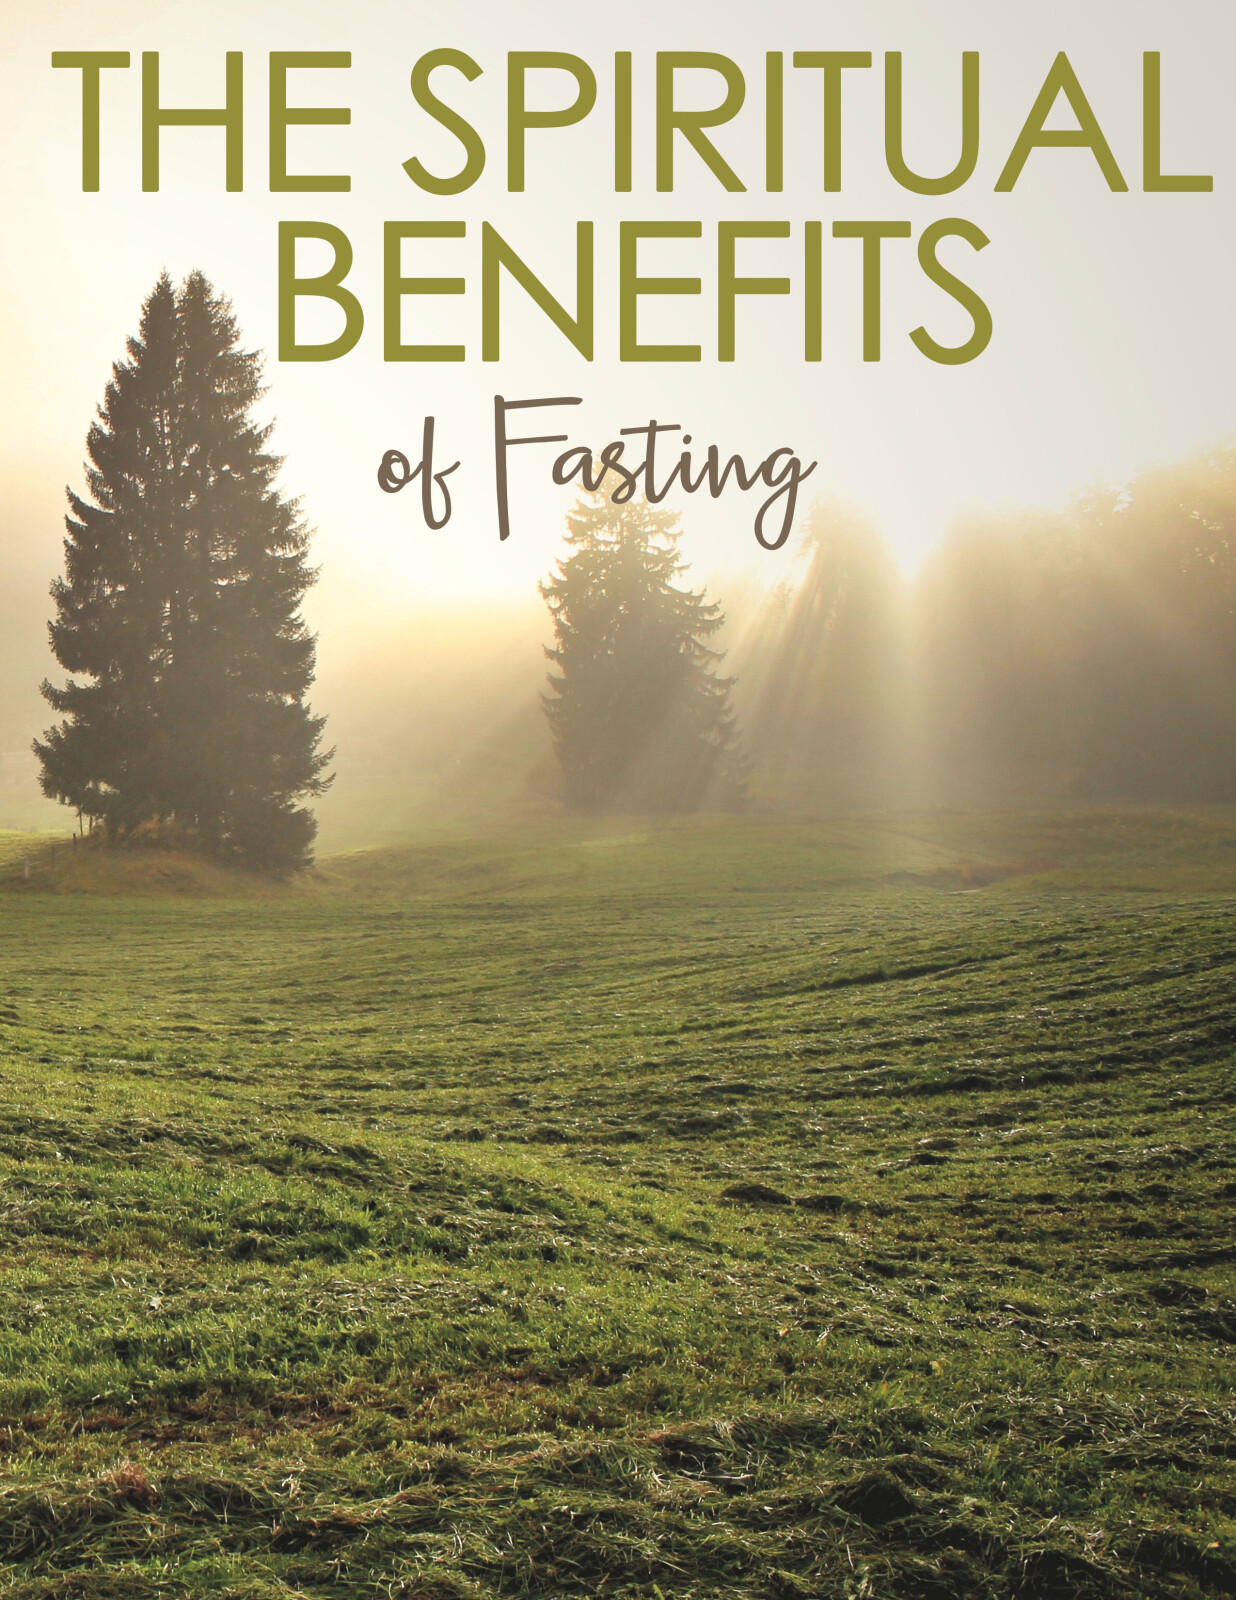 Spiritual Benefits of Fasting